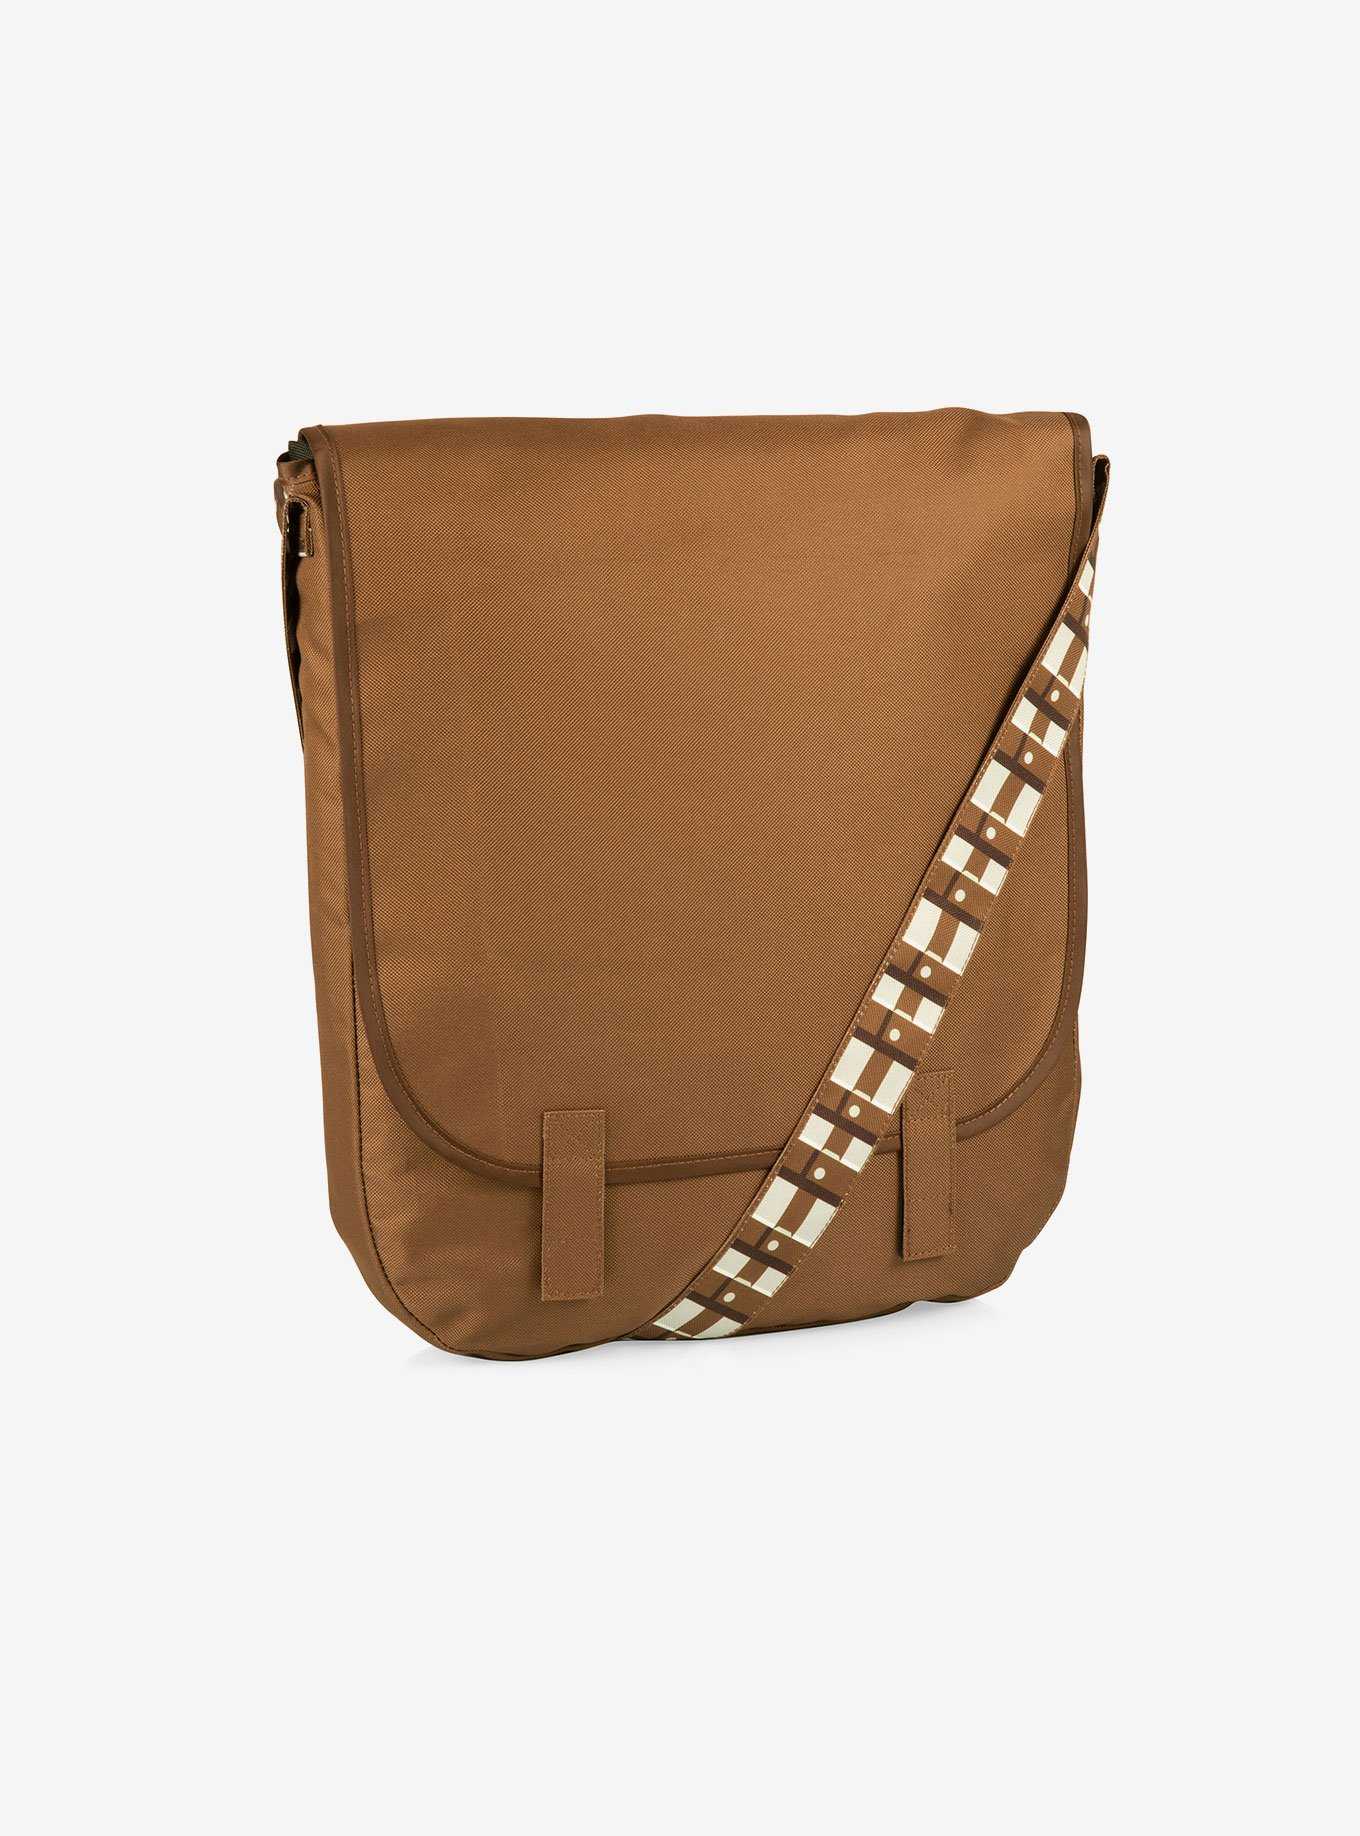 Star Wars Millennium Falcon Blanket in a Bag, , hi-res